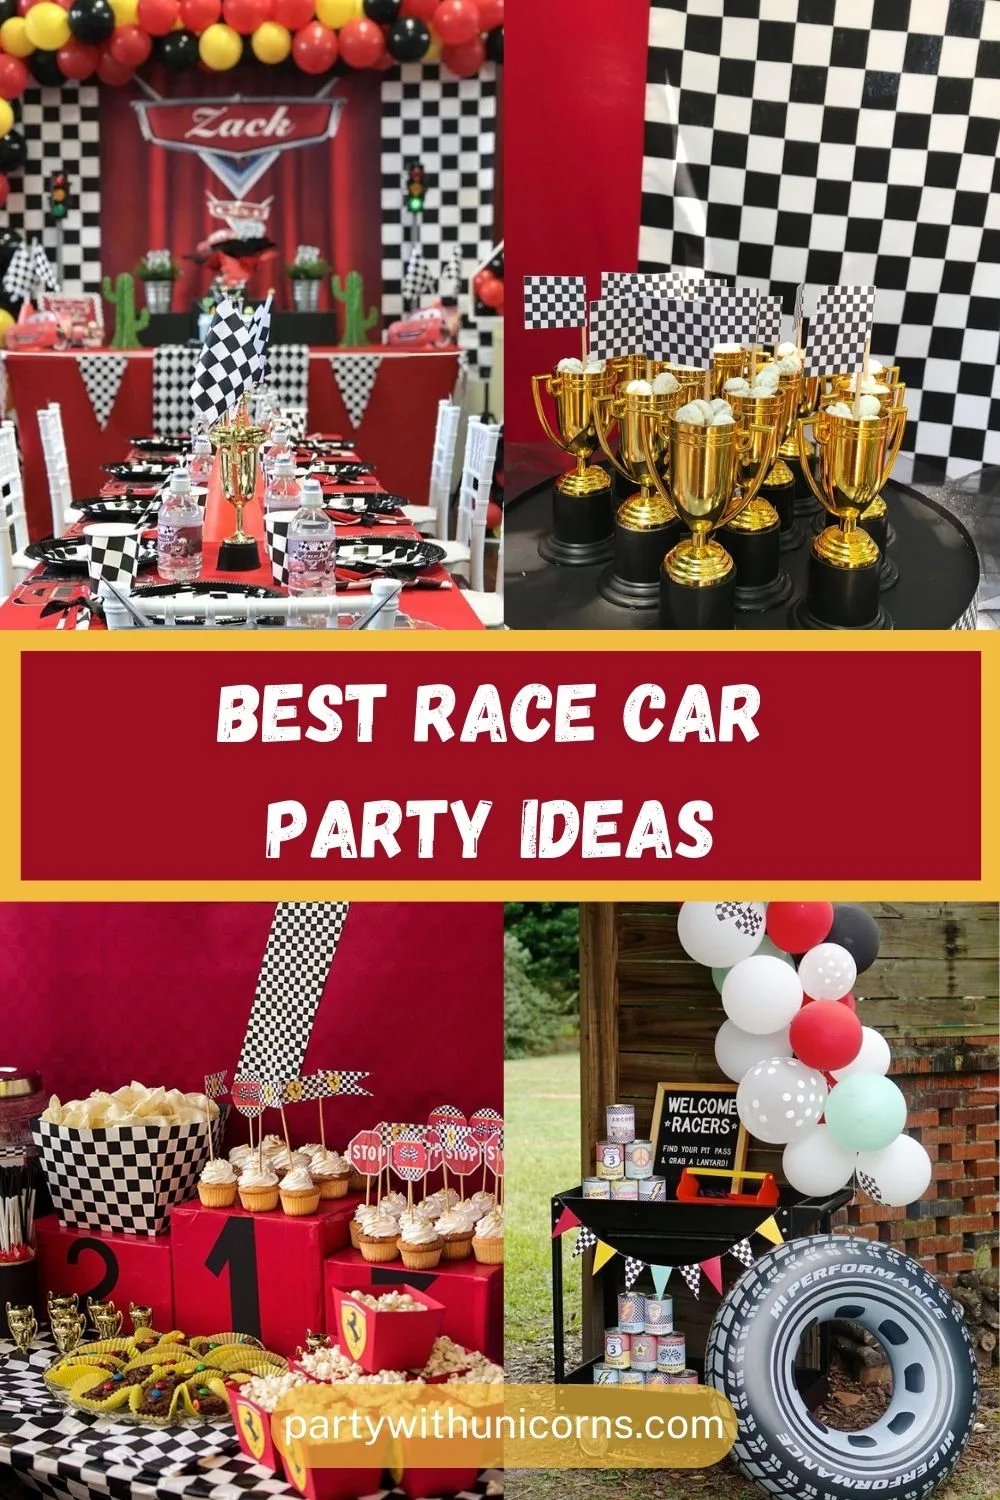 Floración Espectacular Clip mariposa 40 Best Race Car Party Ideas - Party with Unicorns